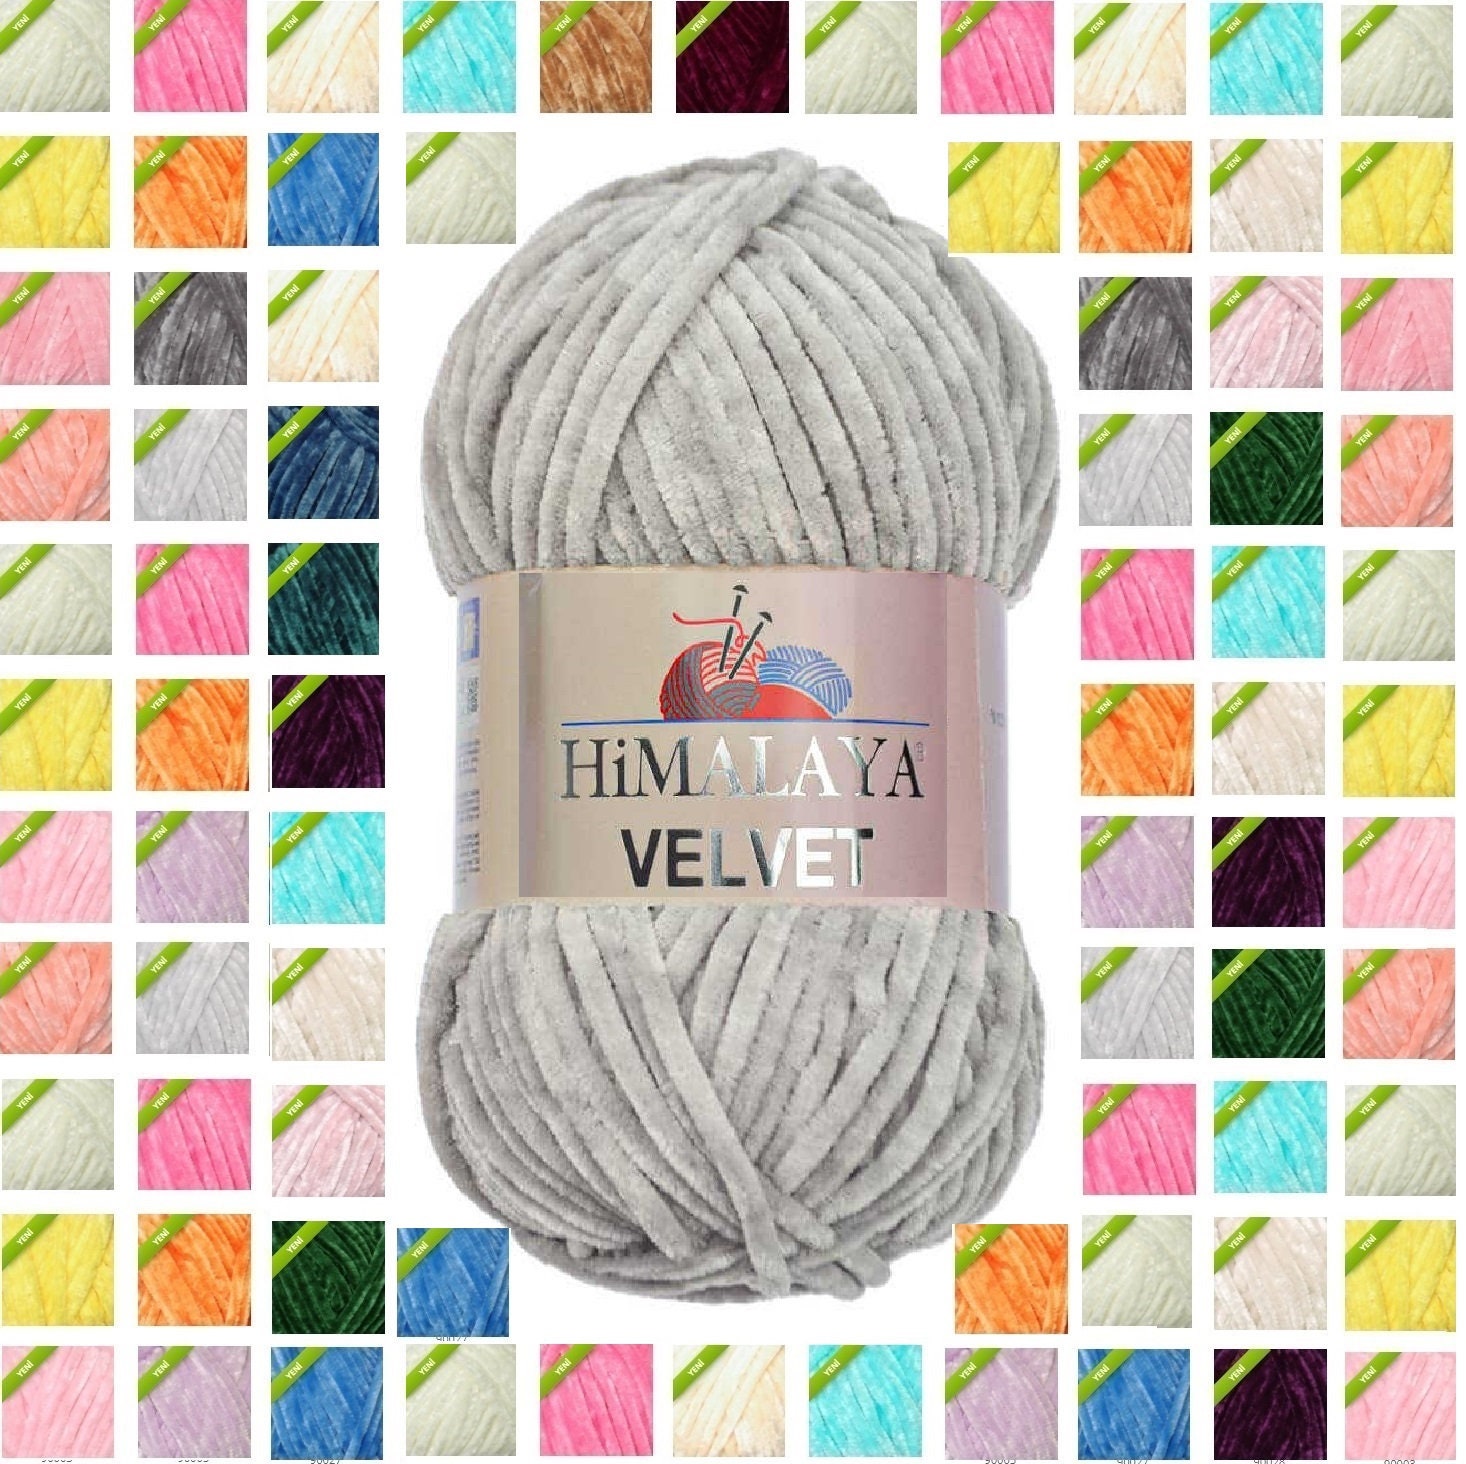 Dolphin Baby micro polyester knitting yarn - Himalaya - 25, 100 g, 120 m, Himalaya  Dolphin Baby